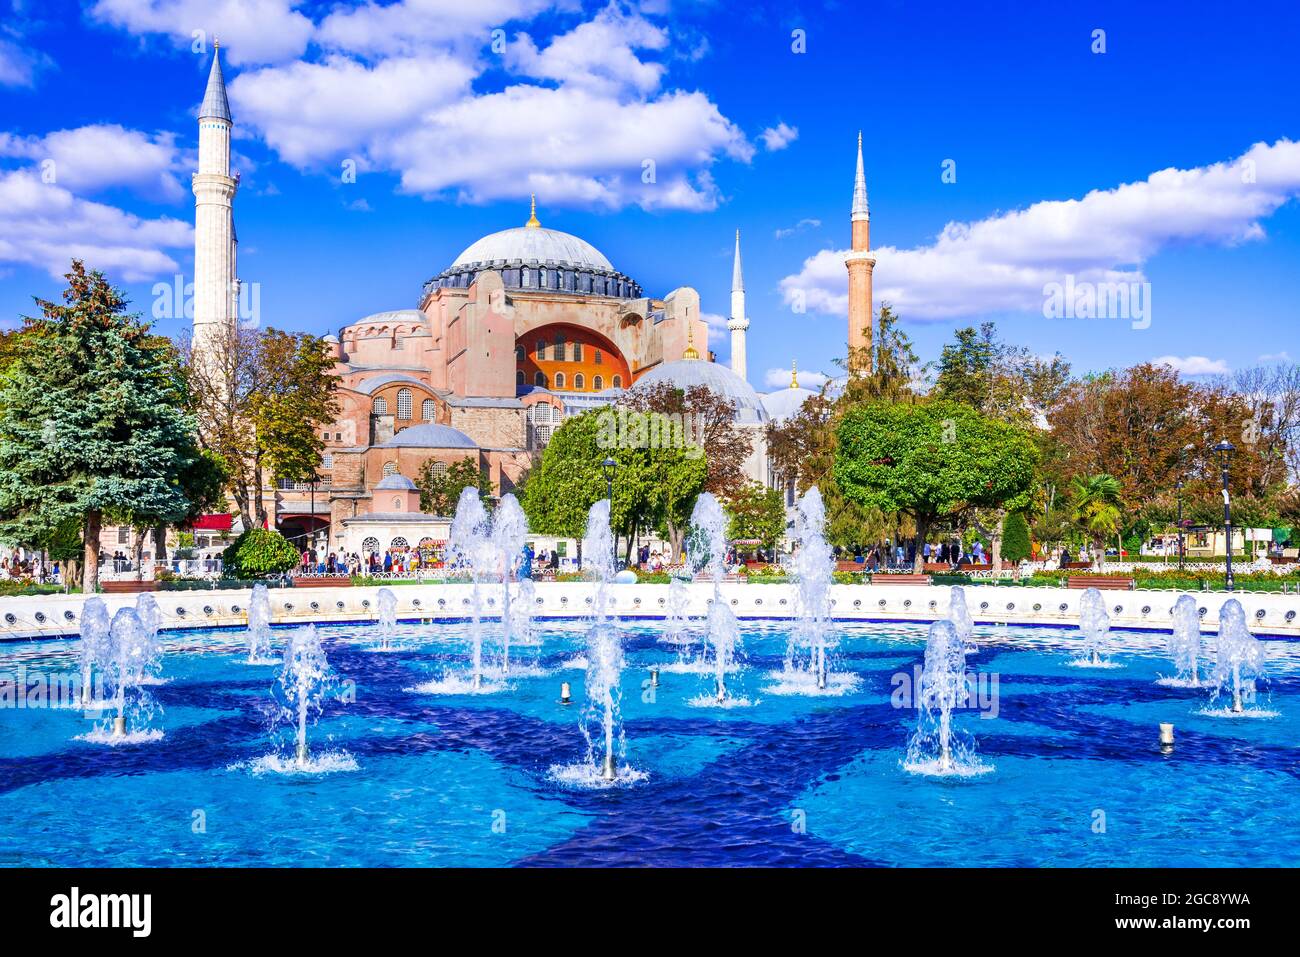 Istanbul, Turchia - Hagia Sophia, Ayasofya antica cattedrale bizantina Impero, oggi moschea nel vecchio Sultanahmet, Costantinopoli. Foto Stock